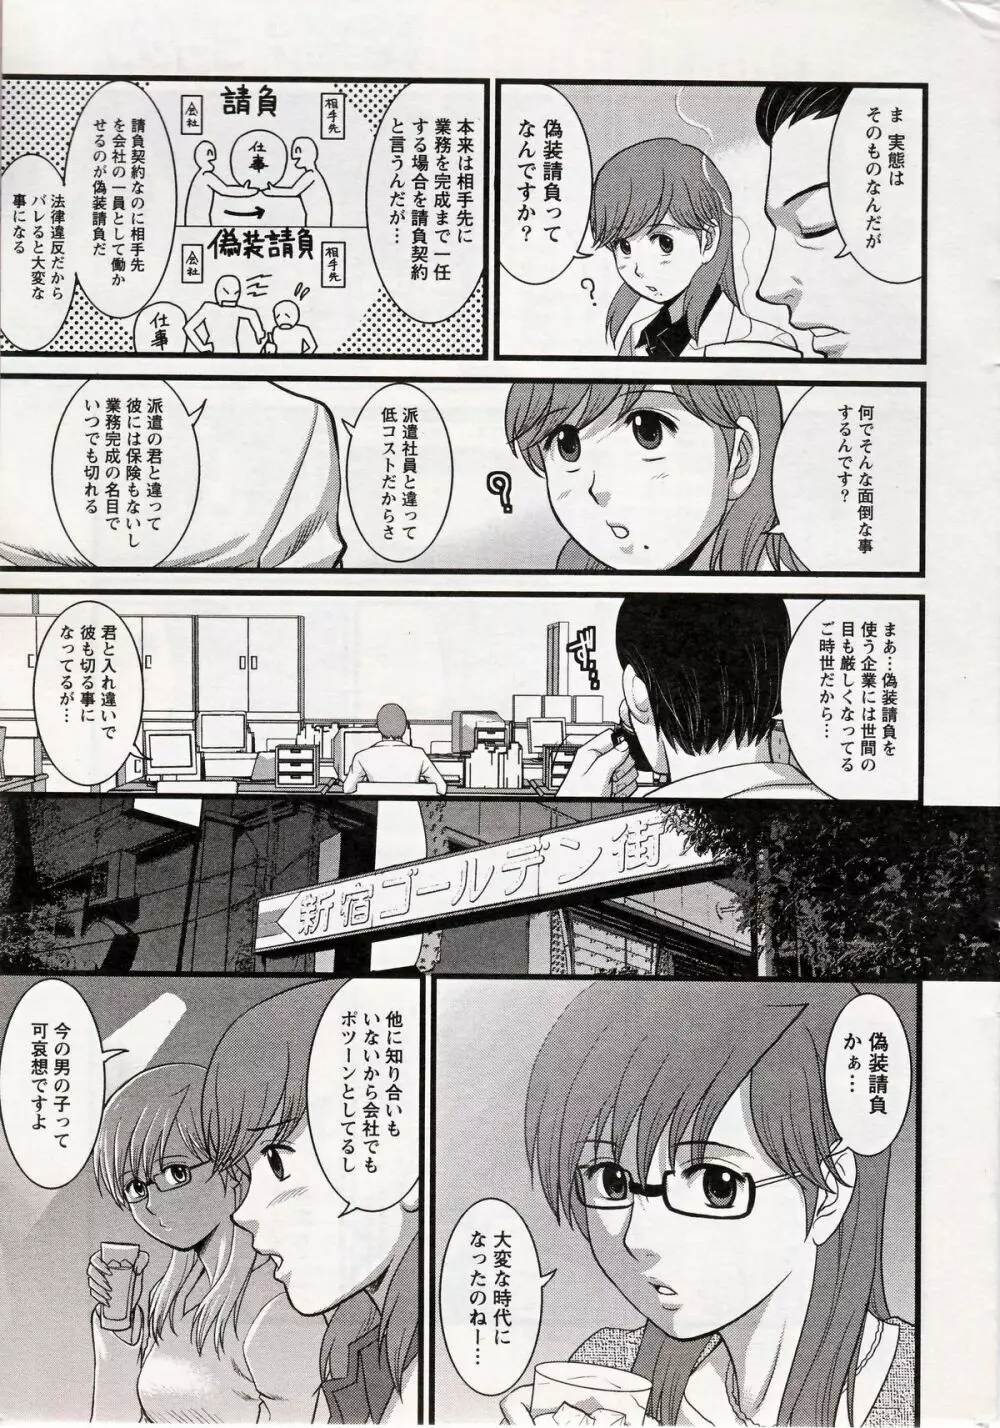 Haken no Muuko-san 14 7ページ